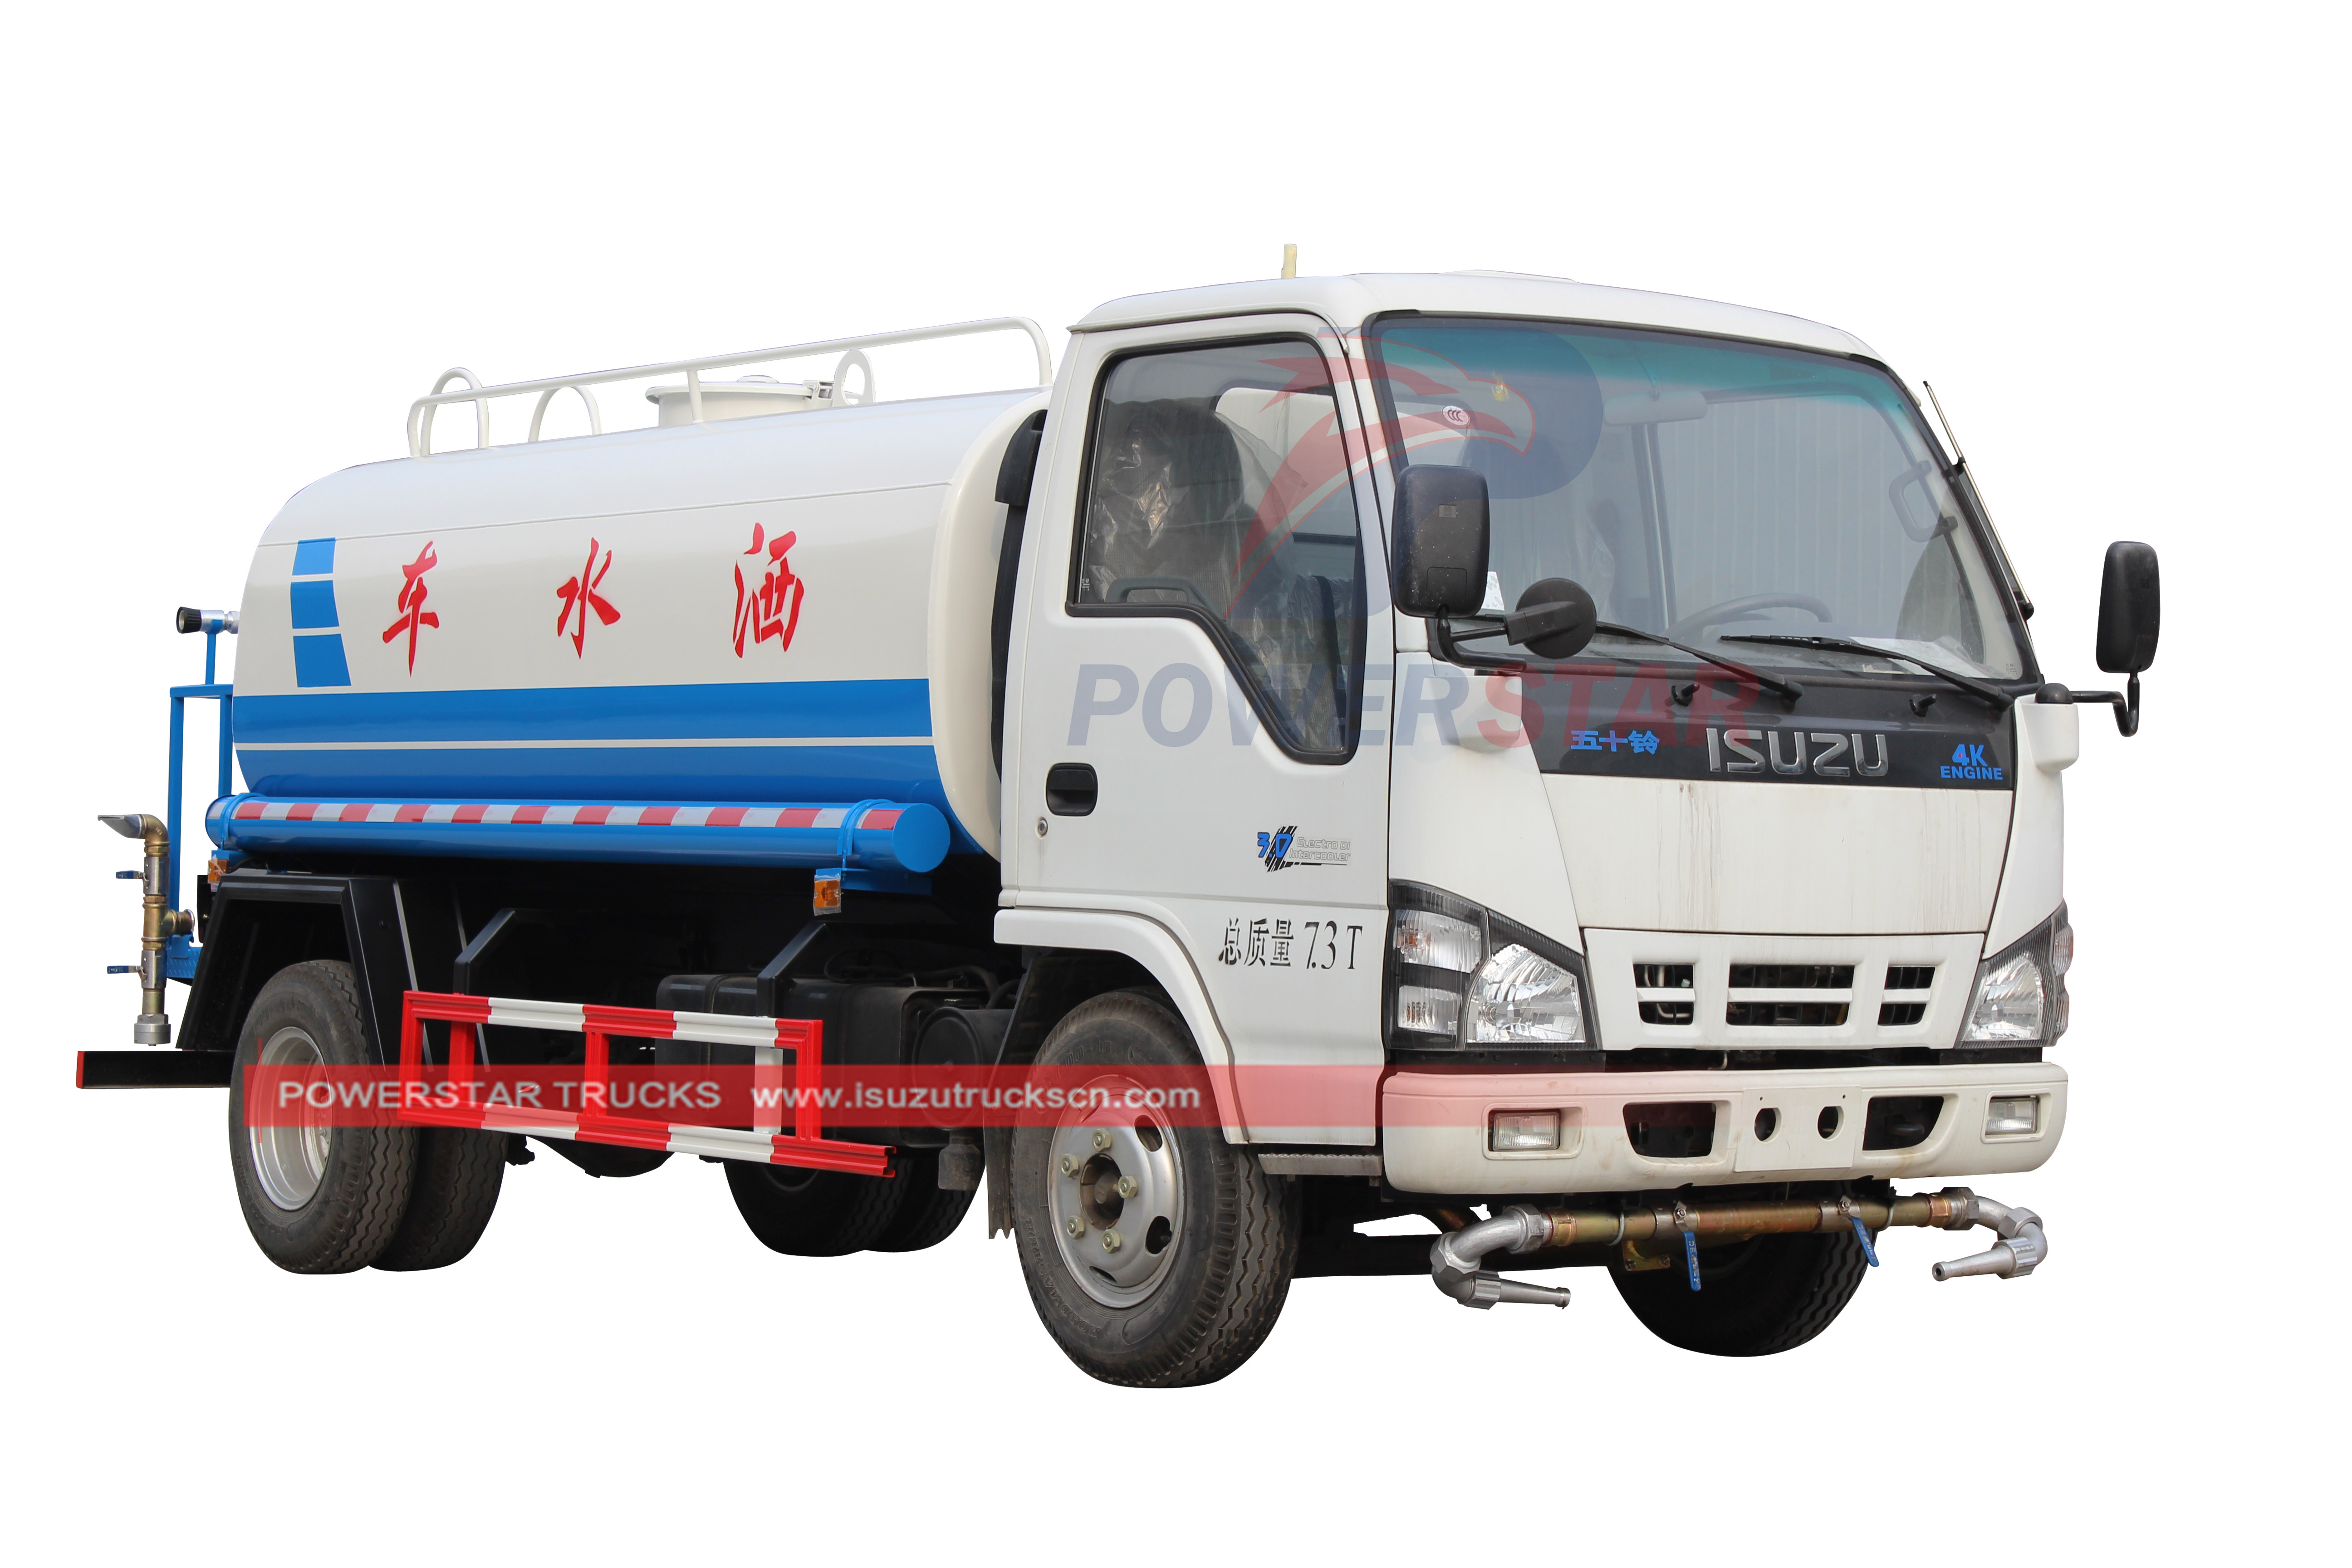 Powerstar water bowser Isuzu Sprinkling truck for sale